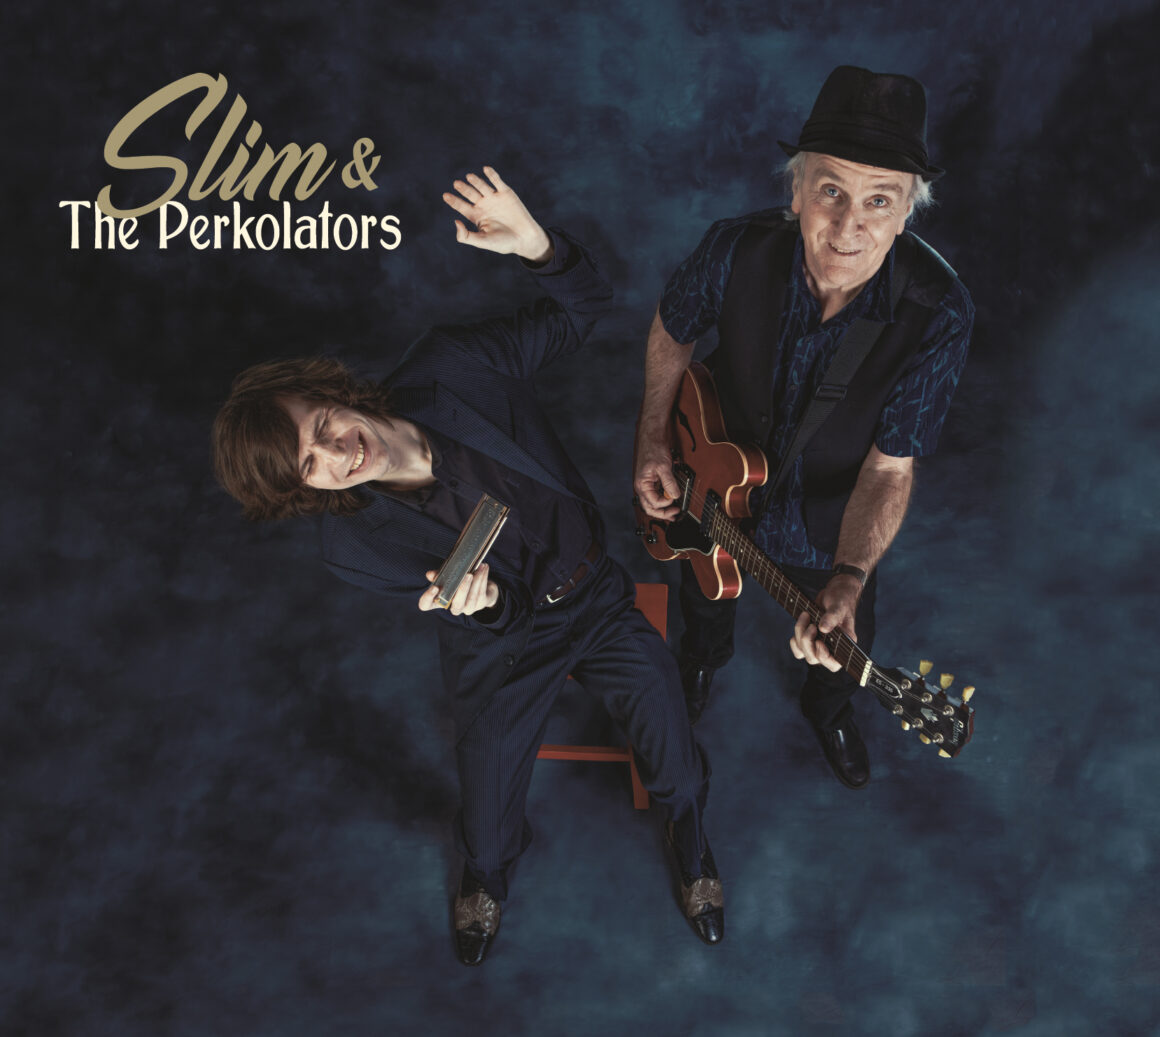 Slim & the Perkolators – Saturday 1:45pm – 3:00pm